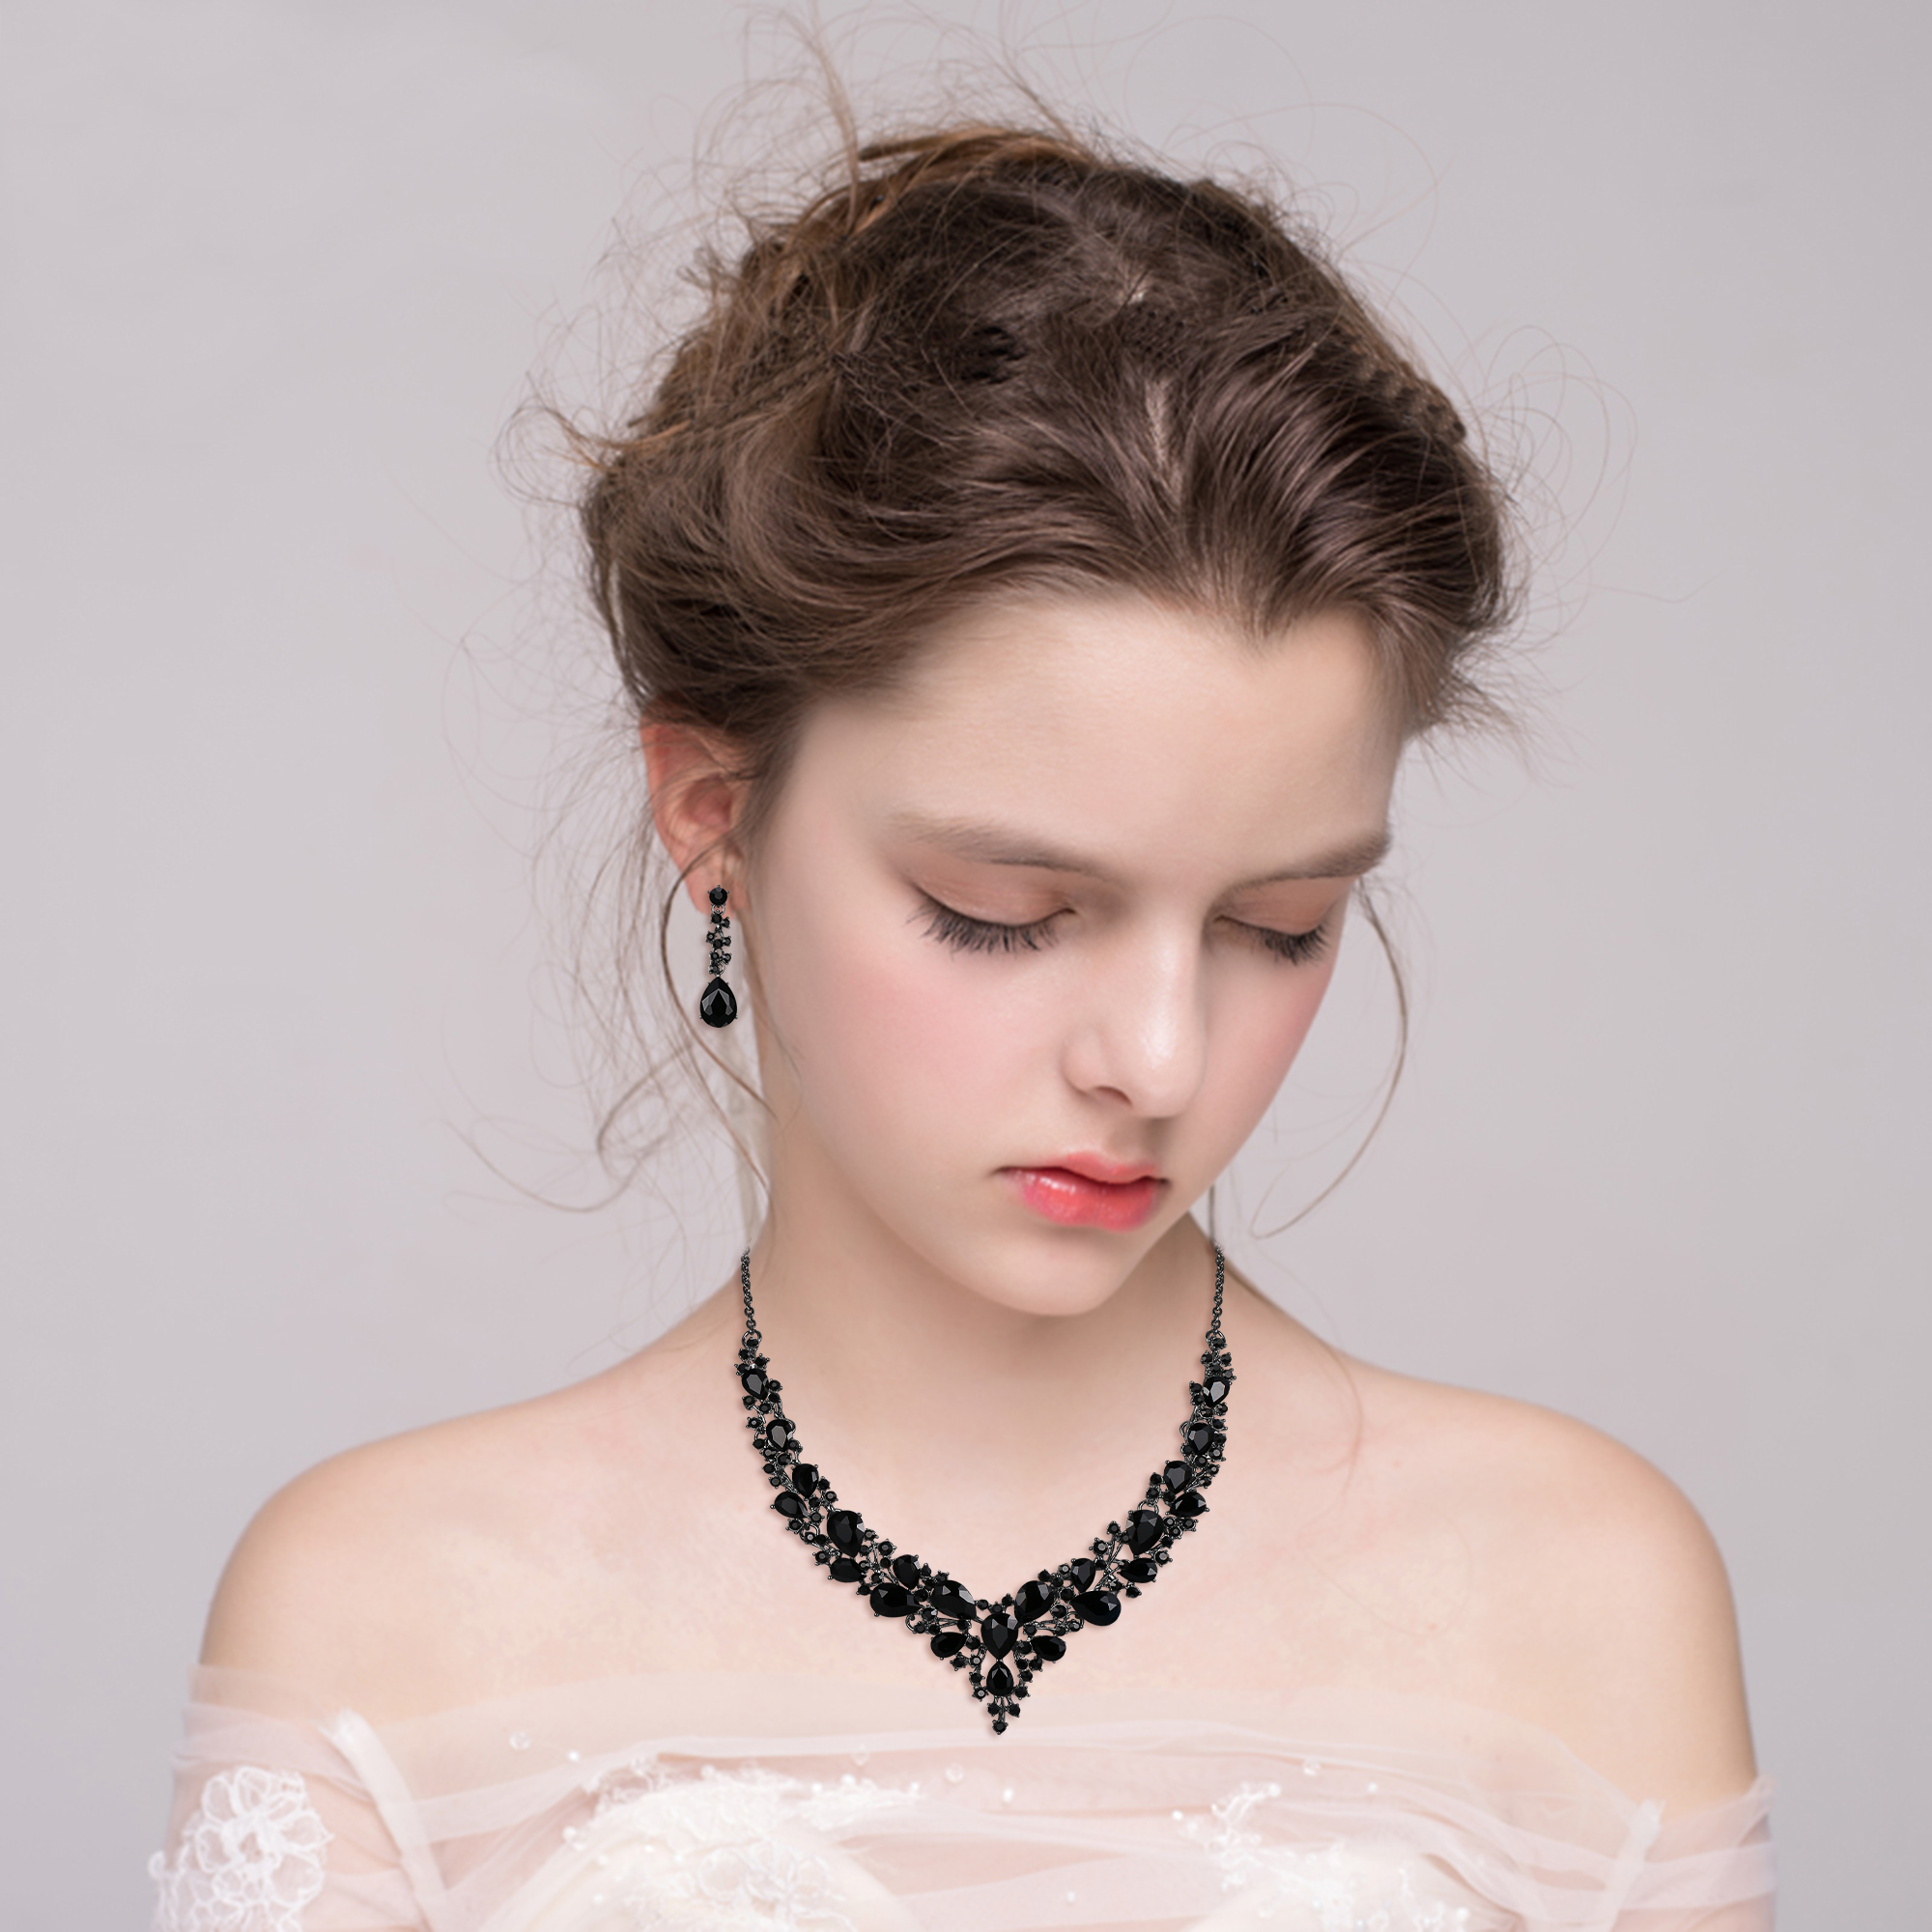 Wedure Wedding Bridal Necklace Earrings Jewelry Set for Women, Austrian Crystal Teardrop Cluster Statement Necklace Dangle Earrings Set Black Black-Silver-Tone - image 3 of 5